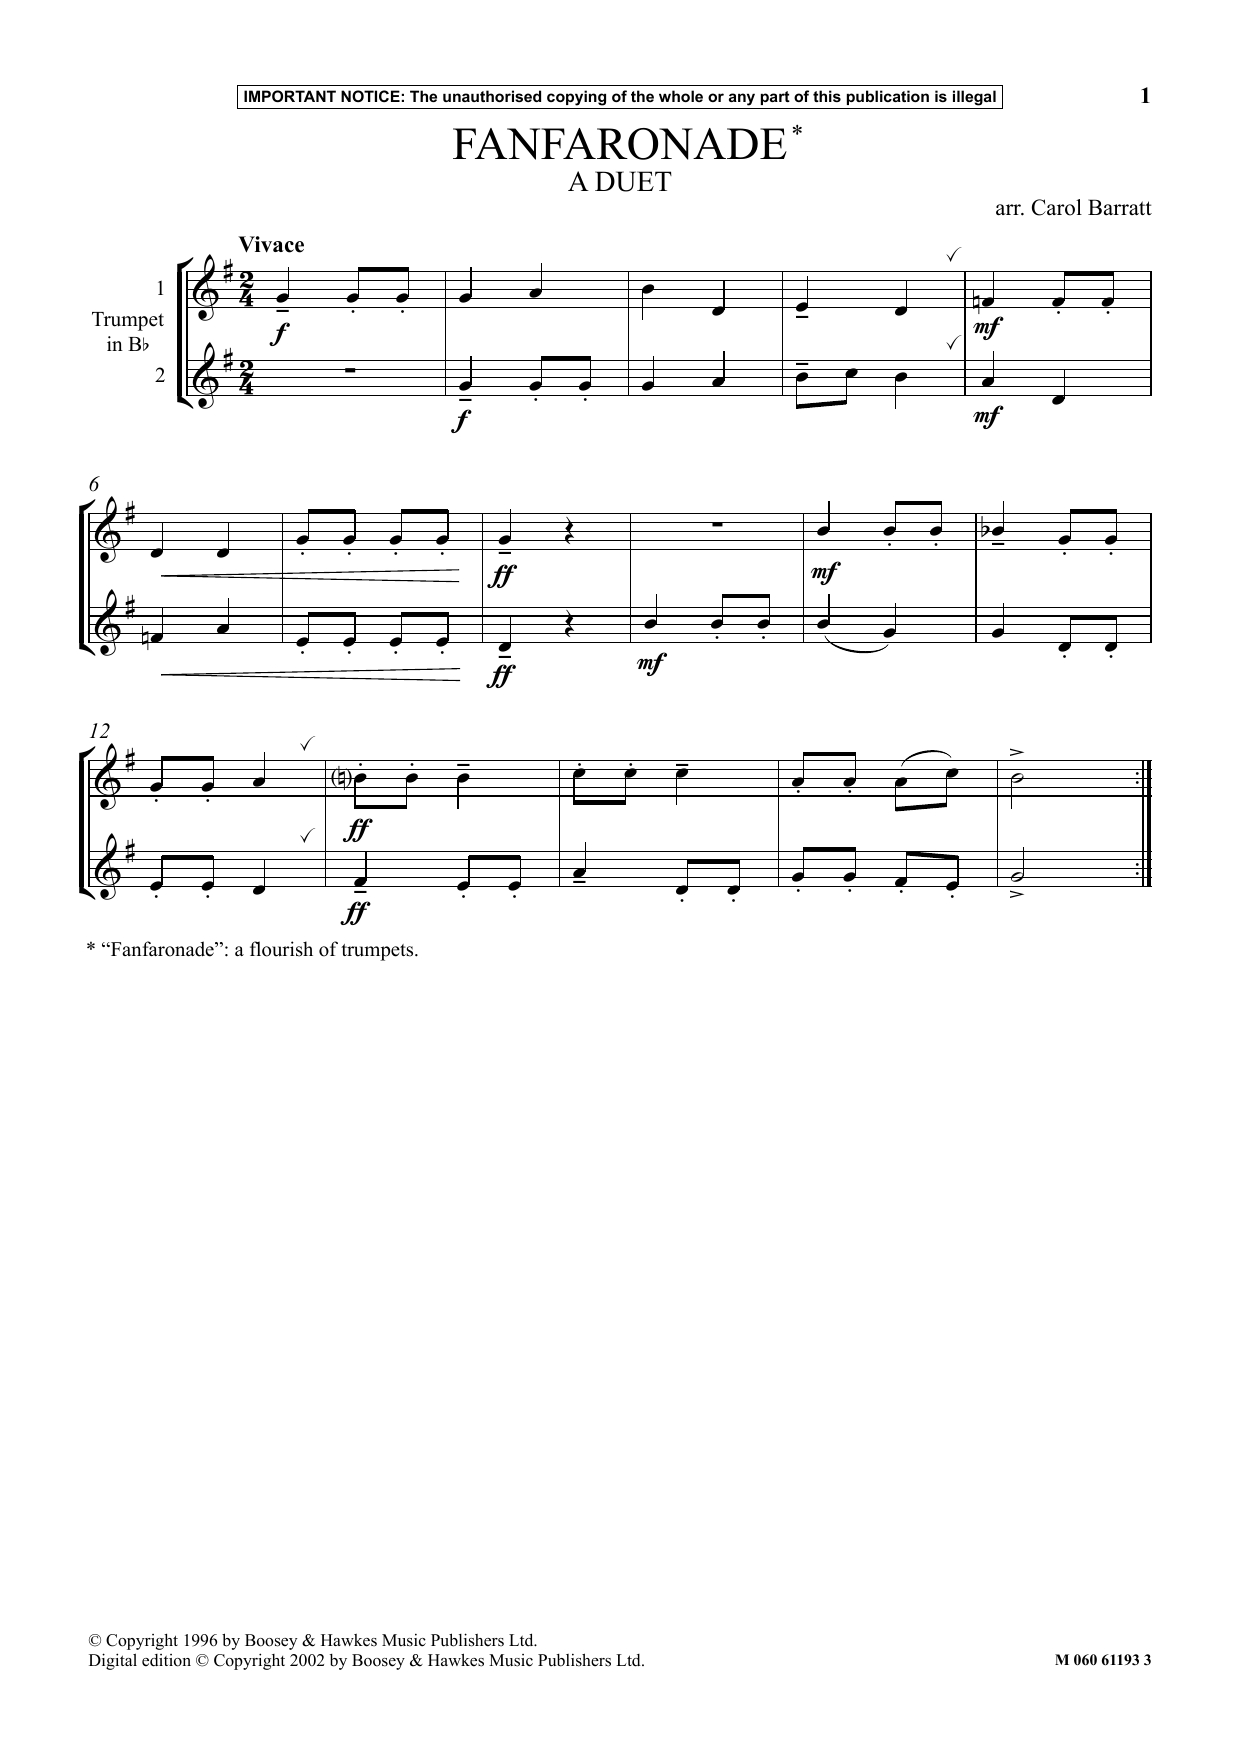 Download Carol Barratt Fanfaronade Sheet Music and learn how to play Instrumental Solo PDF digital score in minutes